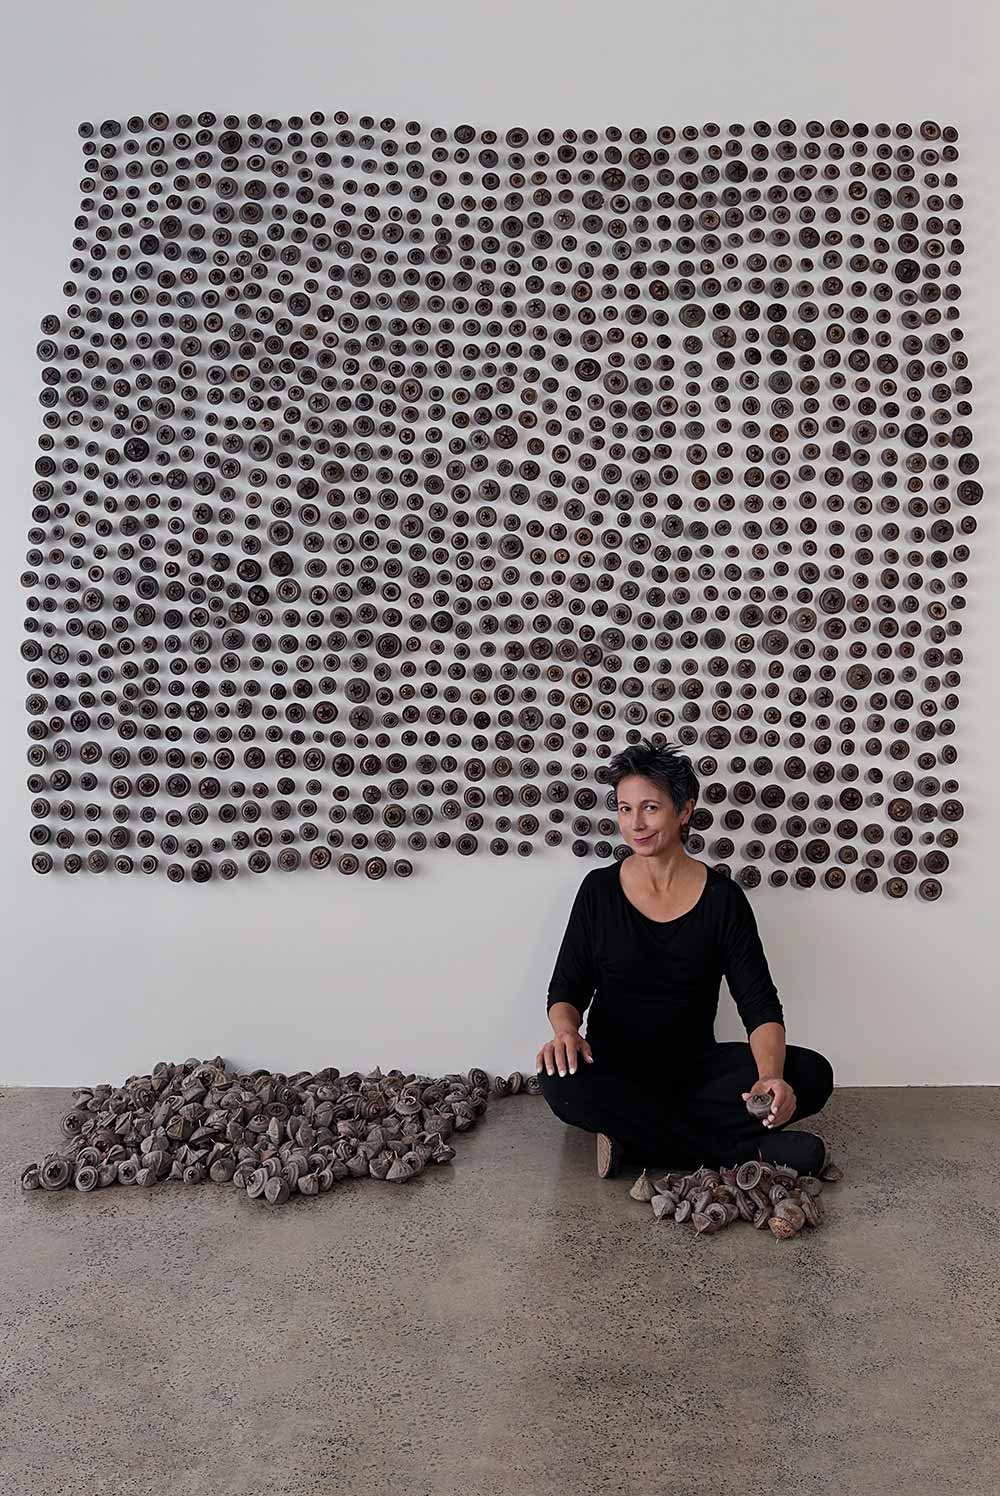 02_Maria-Fernanda-Cardoso-in-her-studio-with-Eucalyptus-rhodantha-gumnuts-wall-2021-Photo-credit-Jillian-Nalty-Courtesy-of-the-artist-and-Sullivan-+-Strumpf